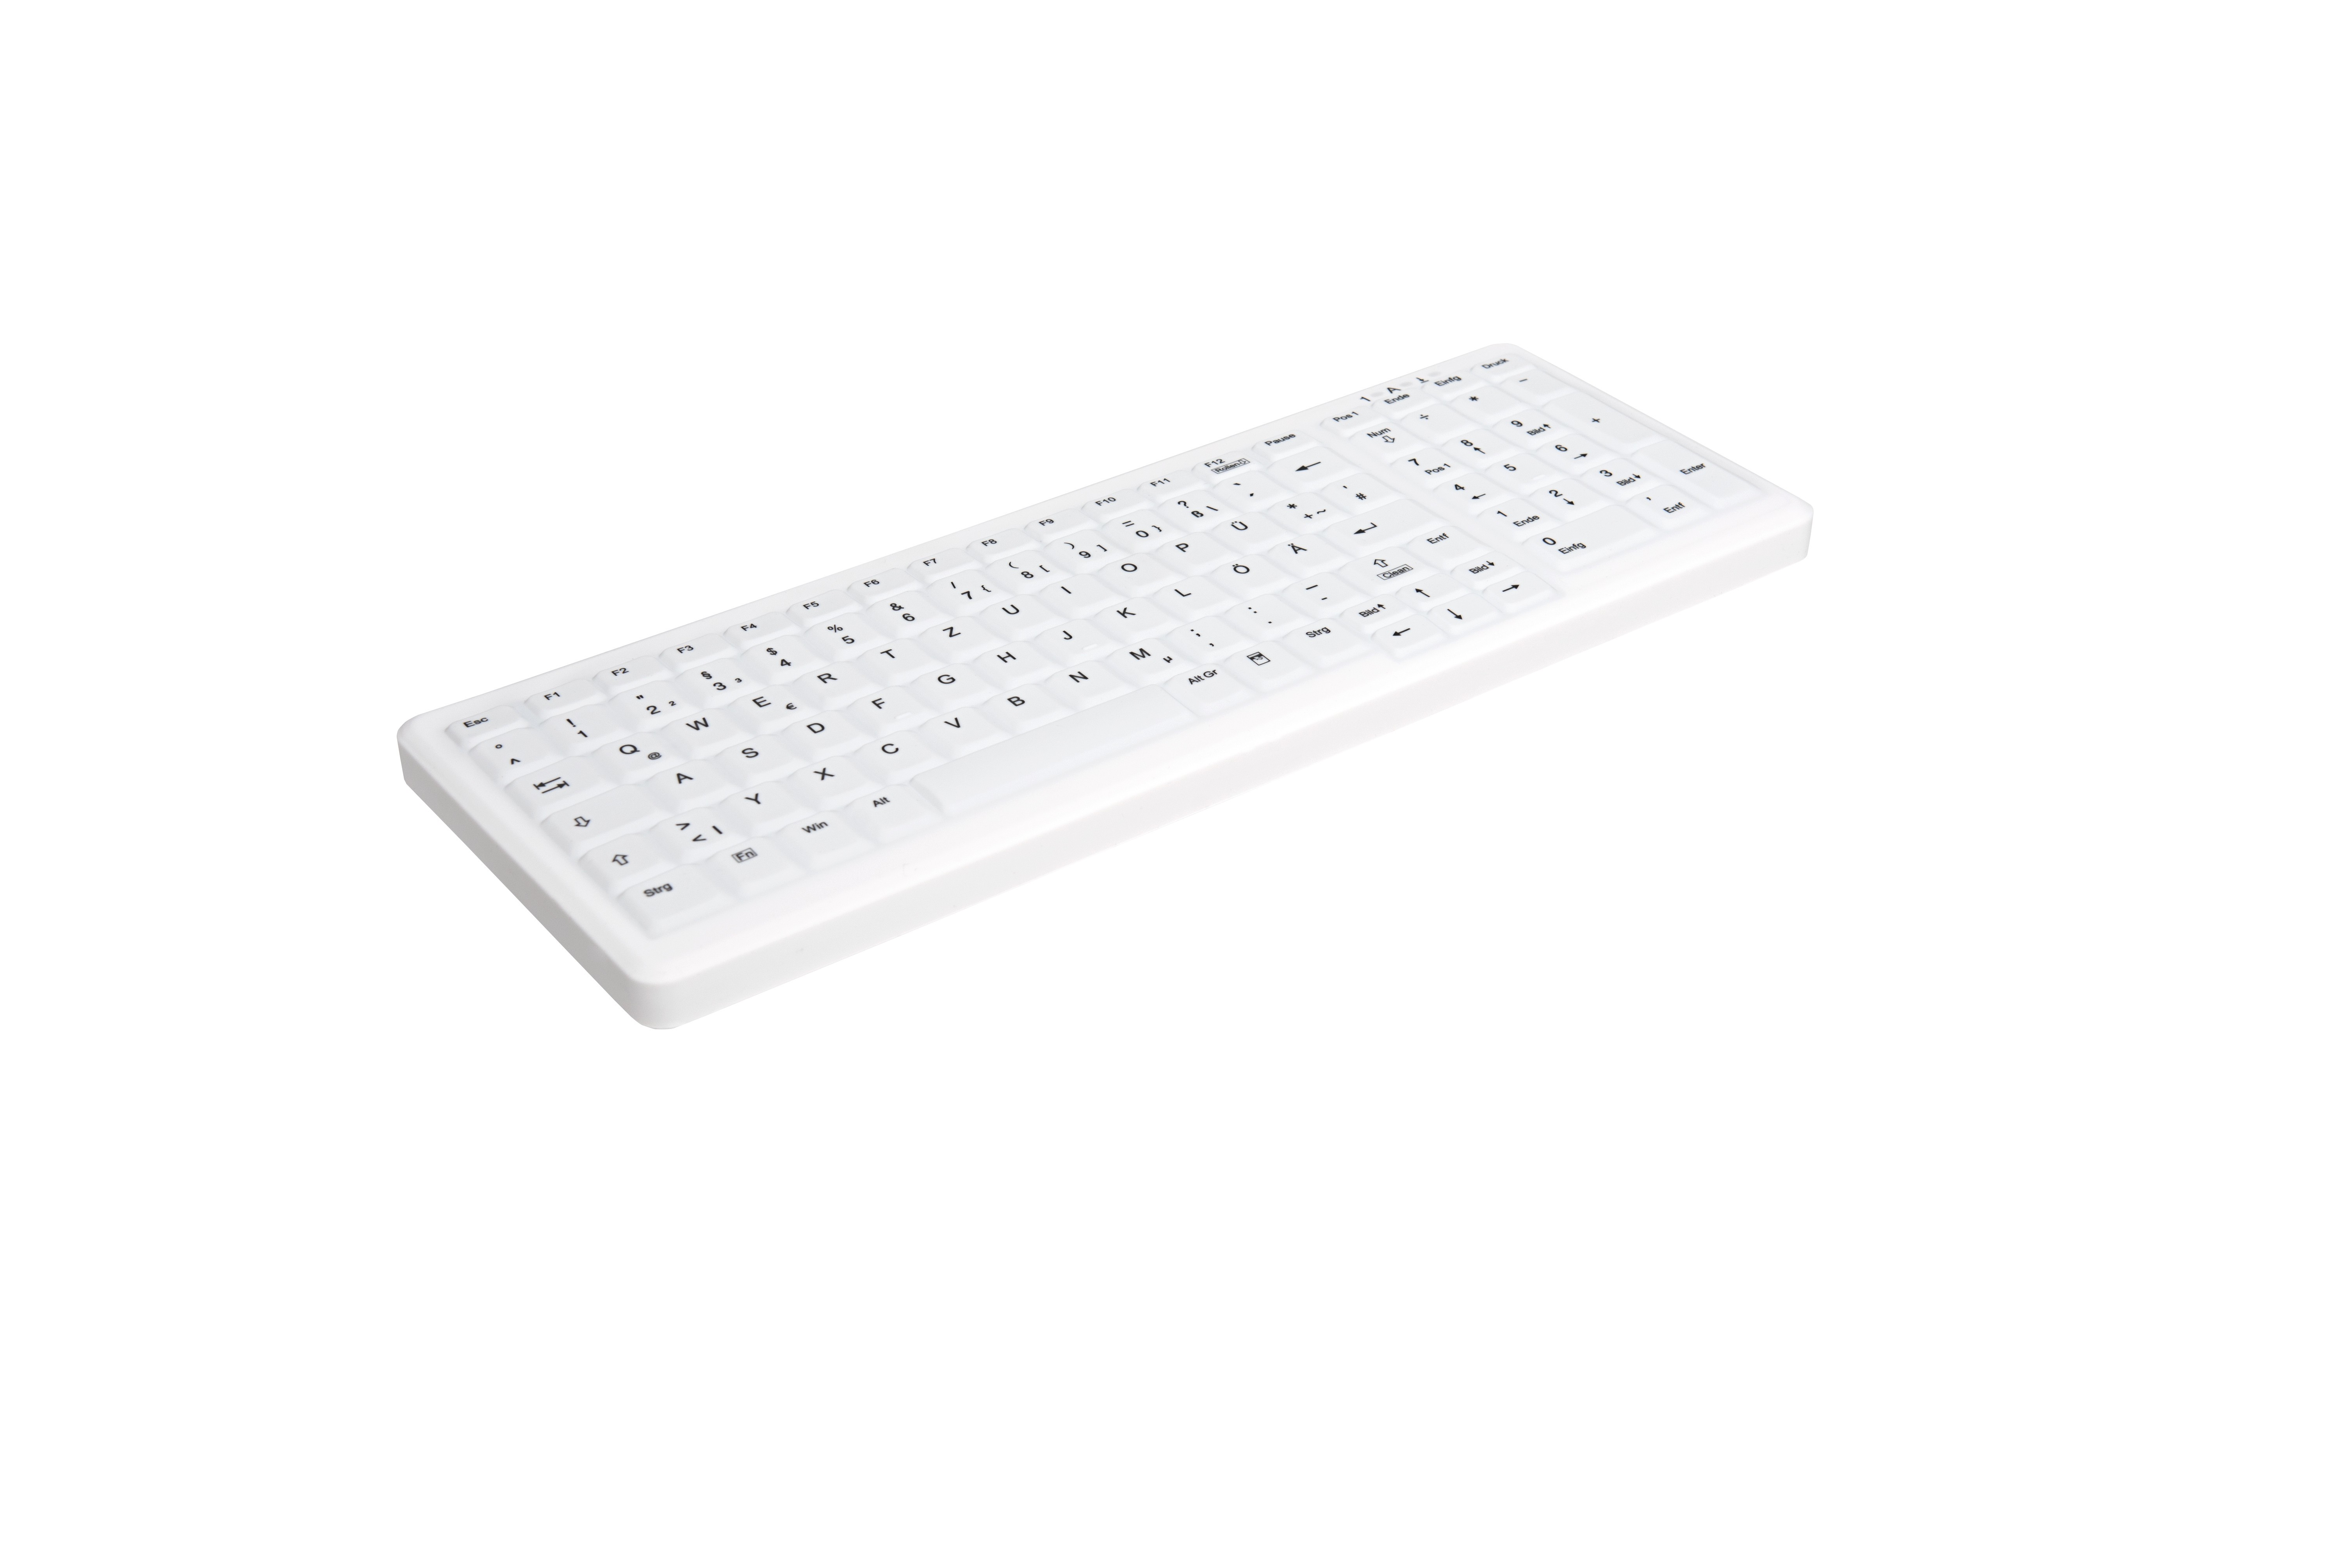 Hygiene Compact Keyboard with NumPad Sealed USB White